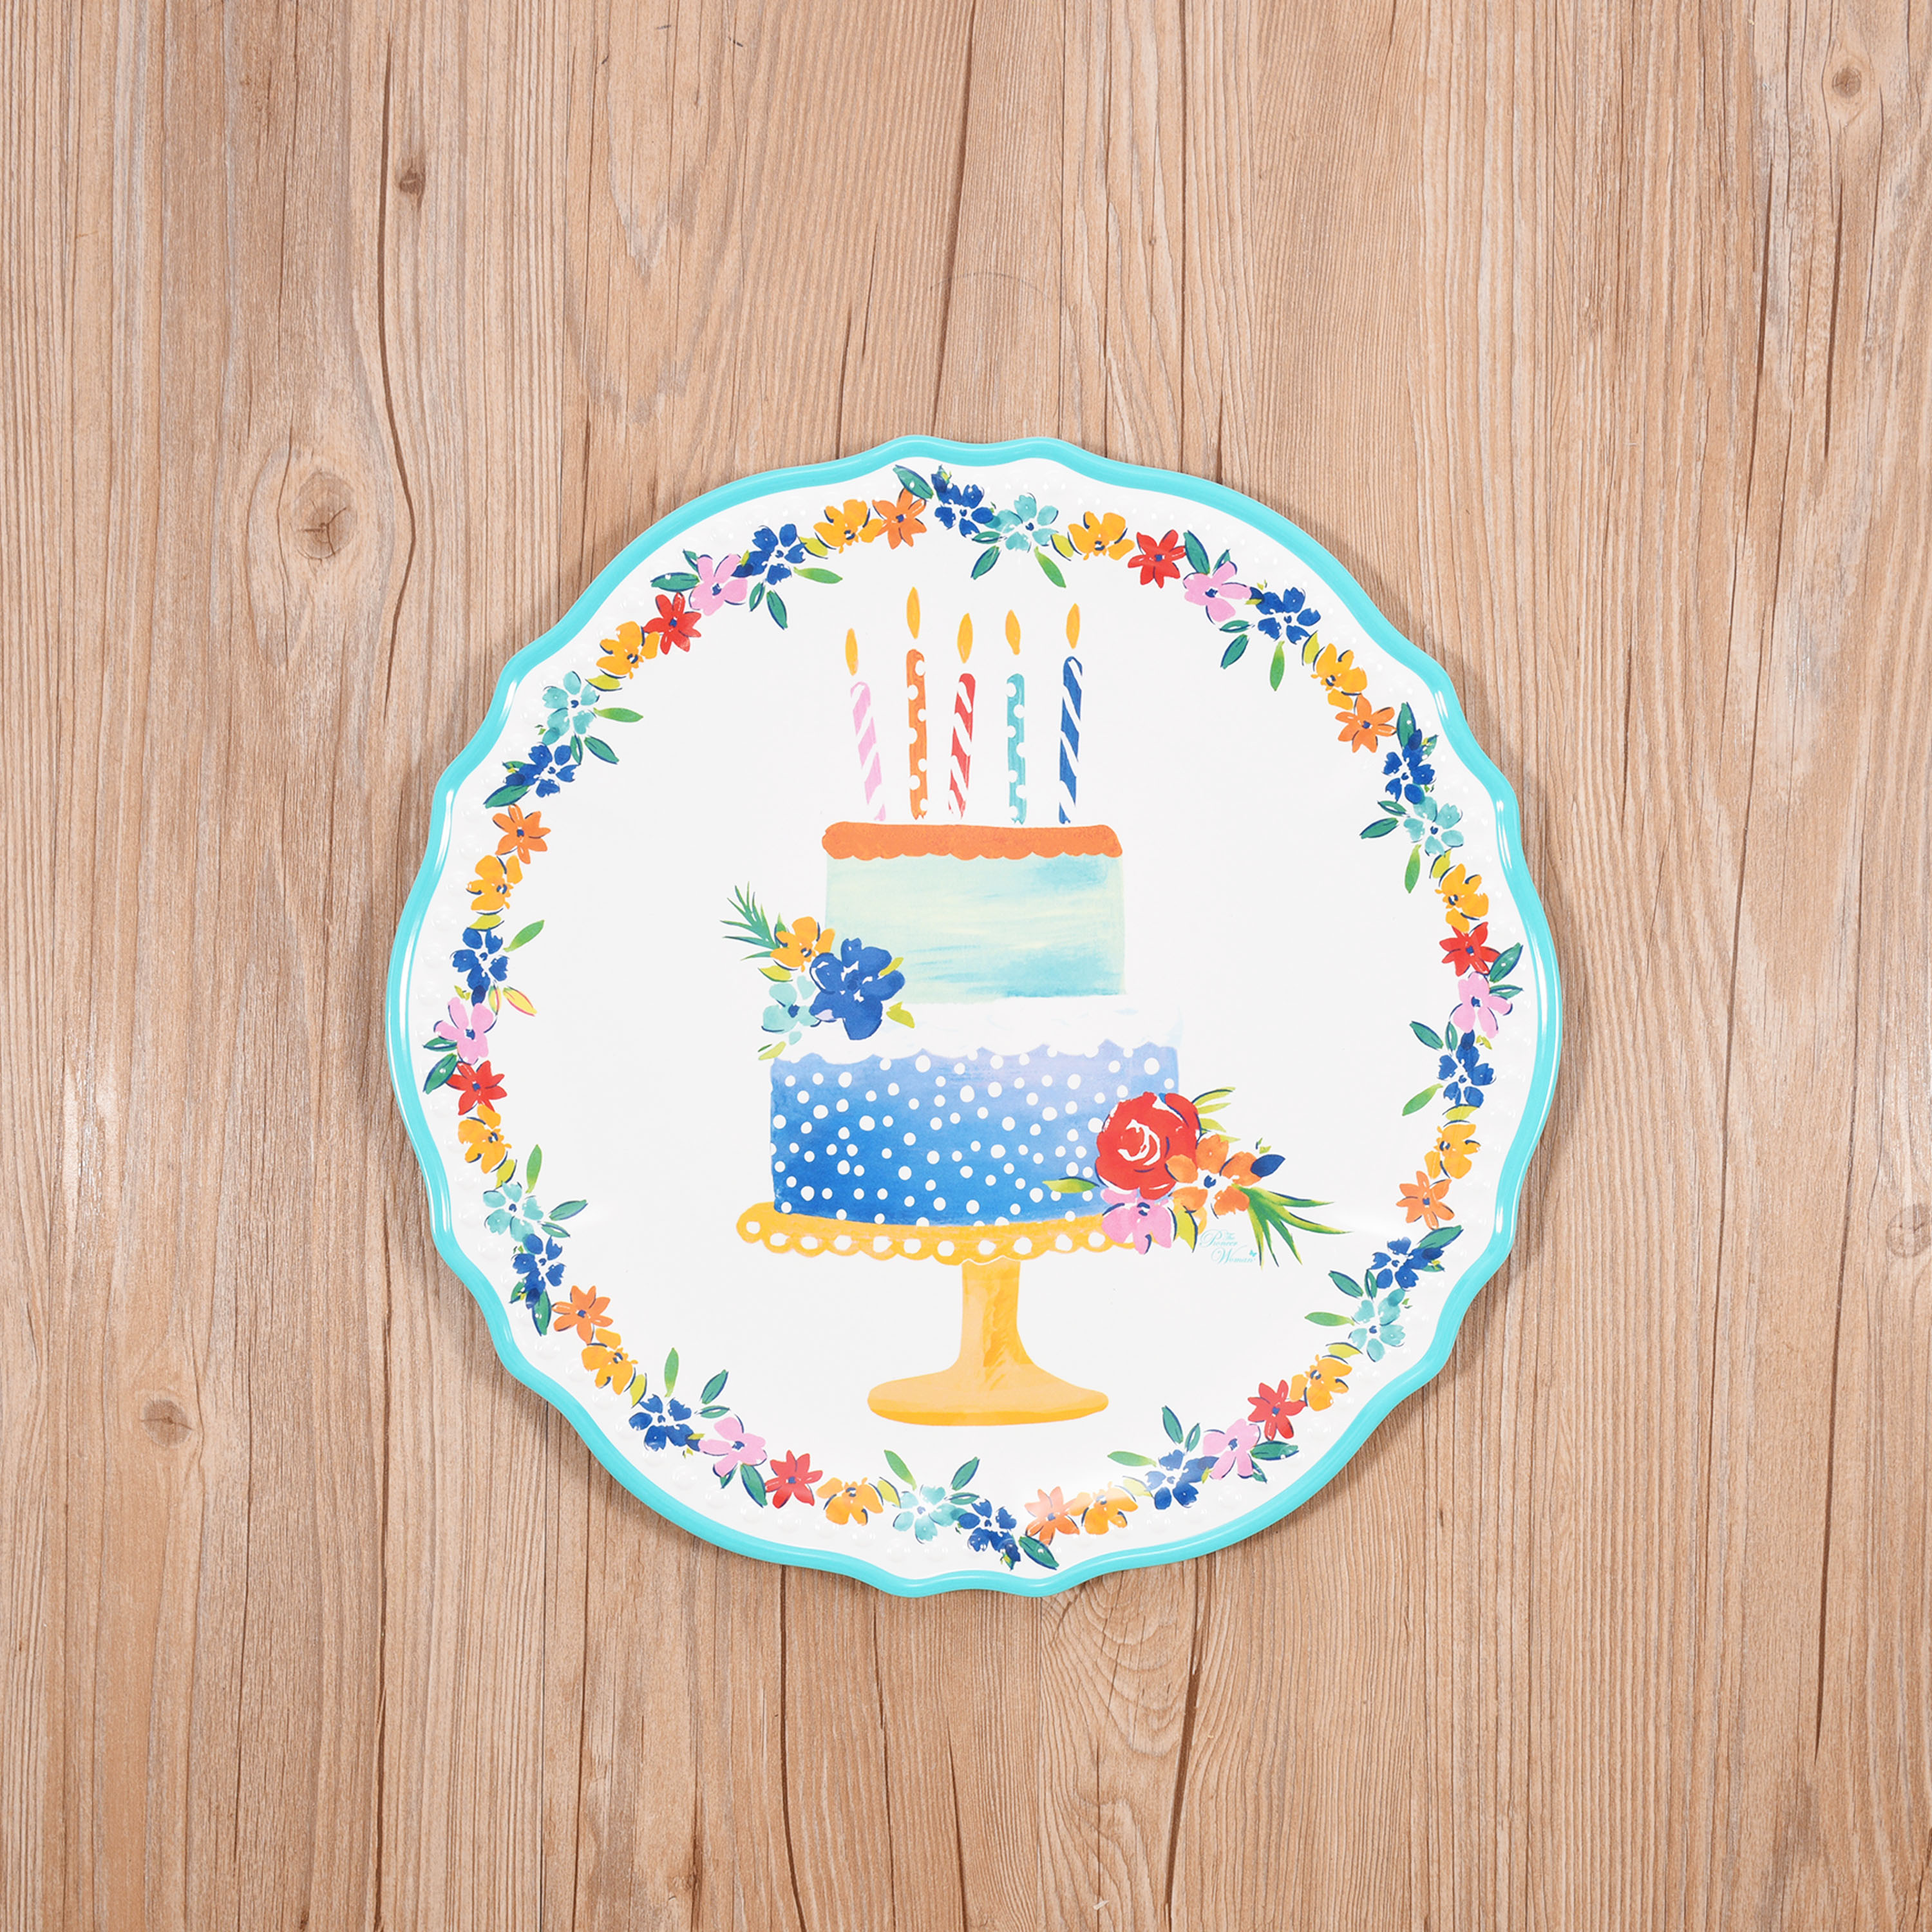 Pioneer Woman 14-inch Birthday Platter Assortment - image 1 of 8